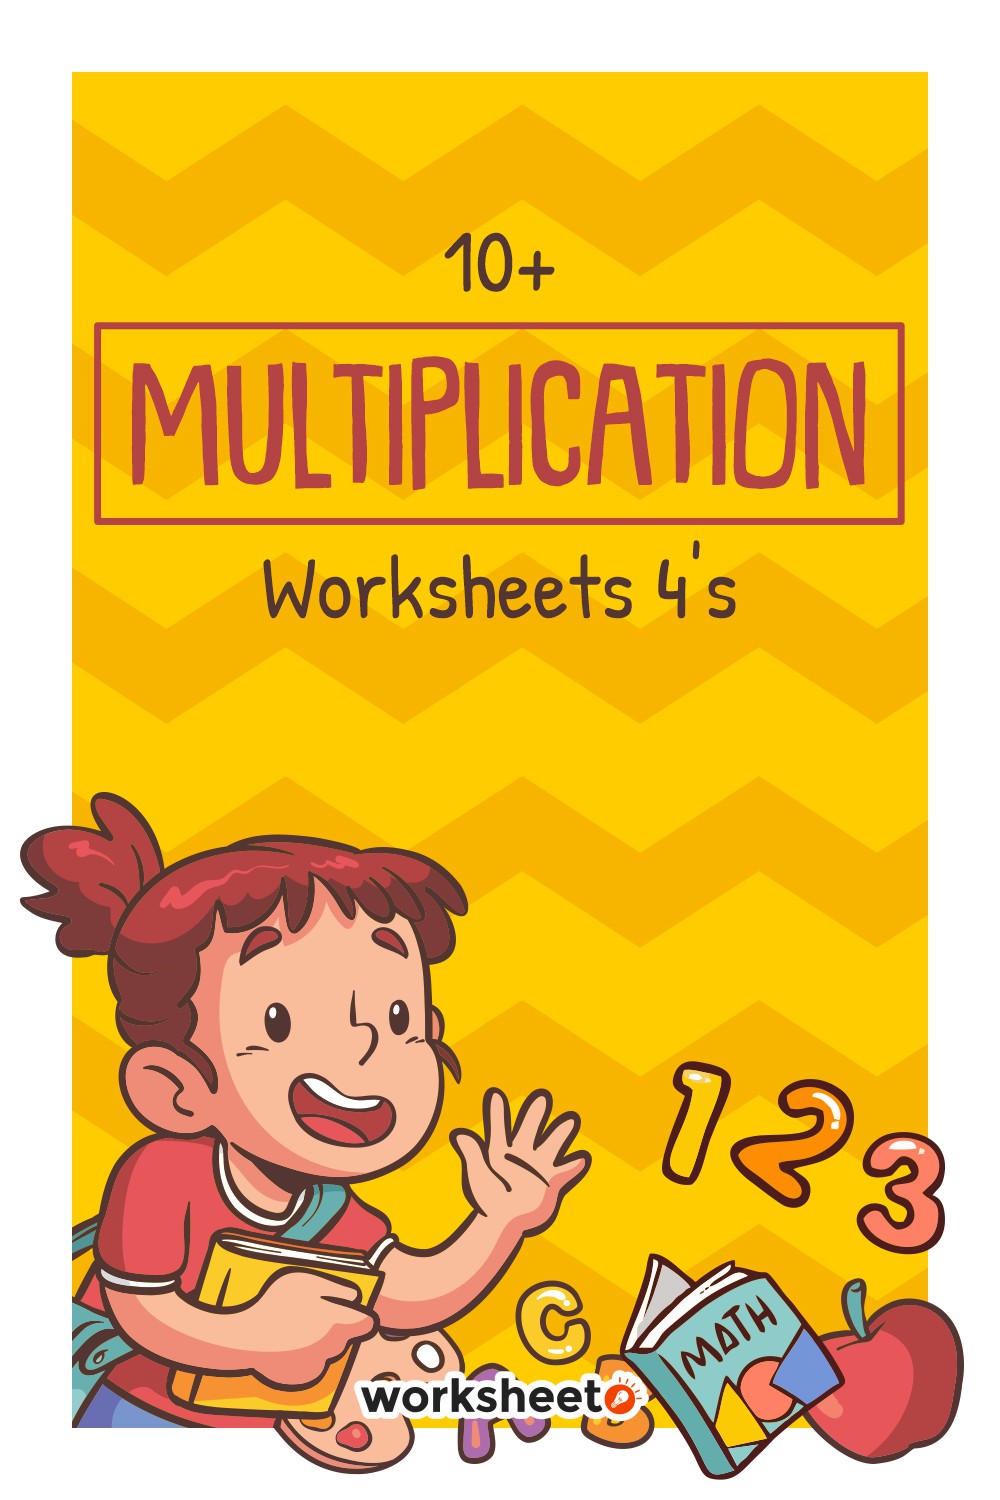 11 Images of Multiplication Worksheets 4S